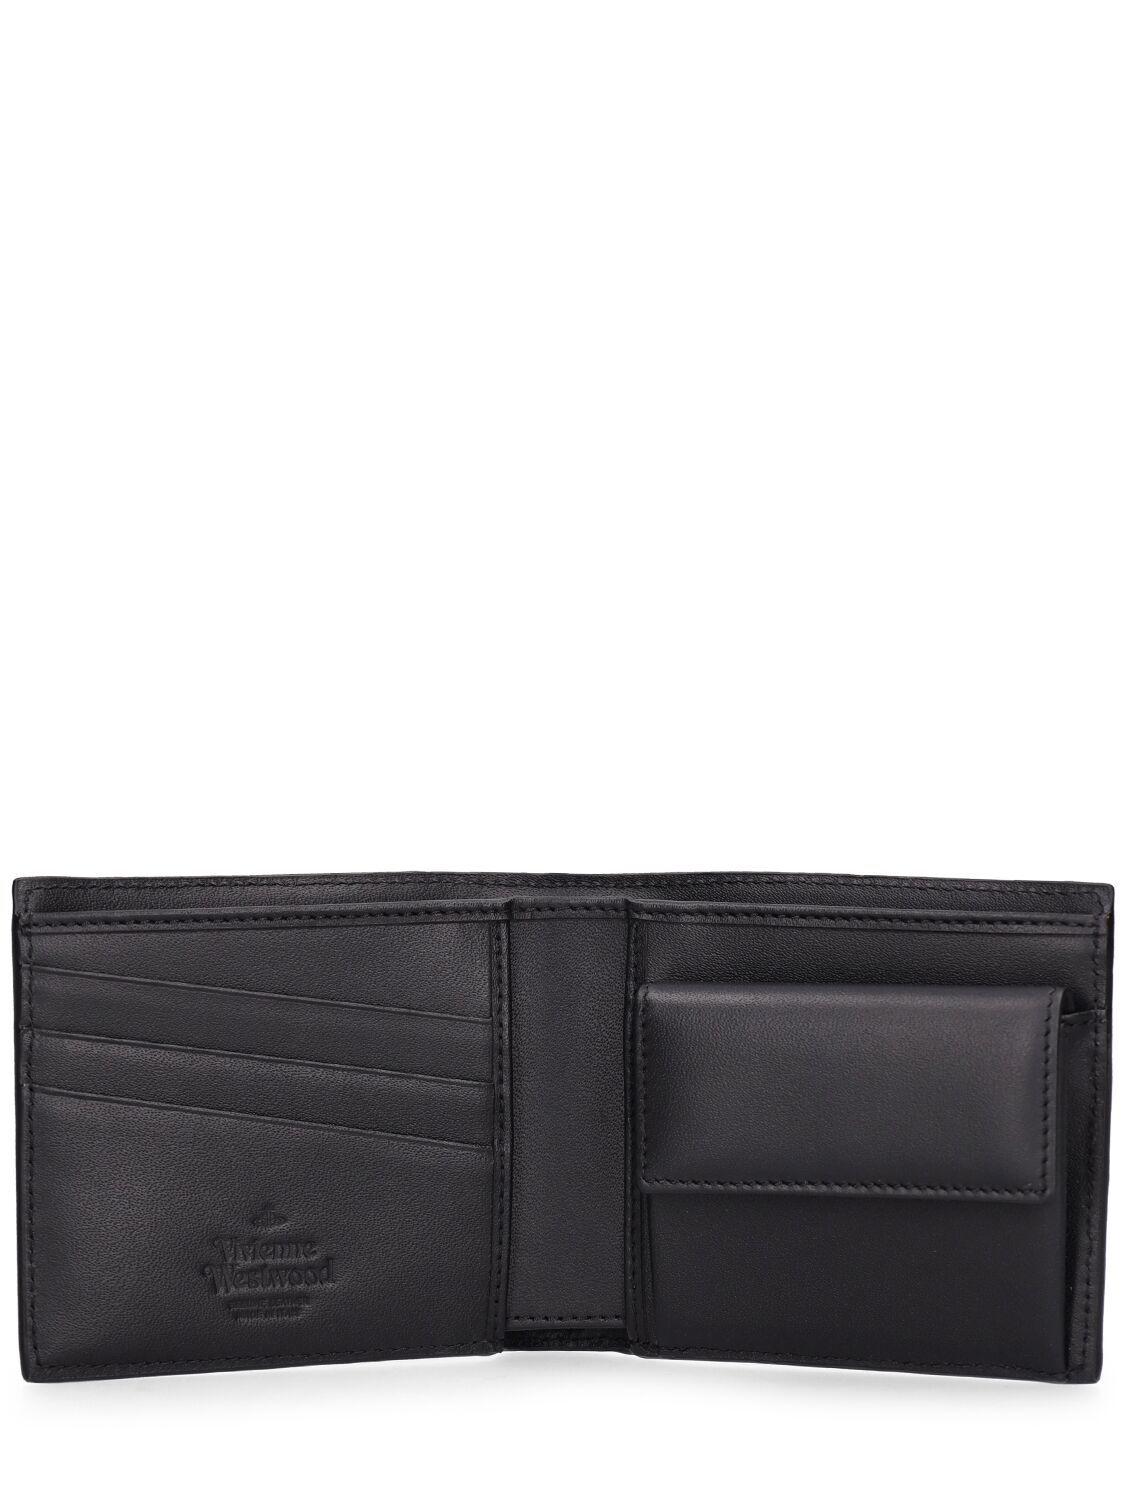 Women's Saffiano Leather Wallet by Vivienne Westwood